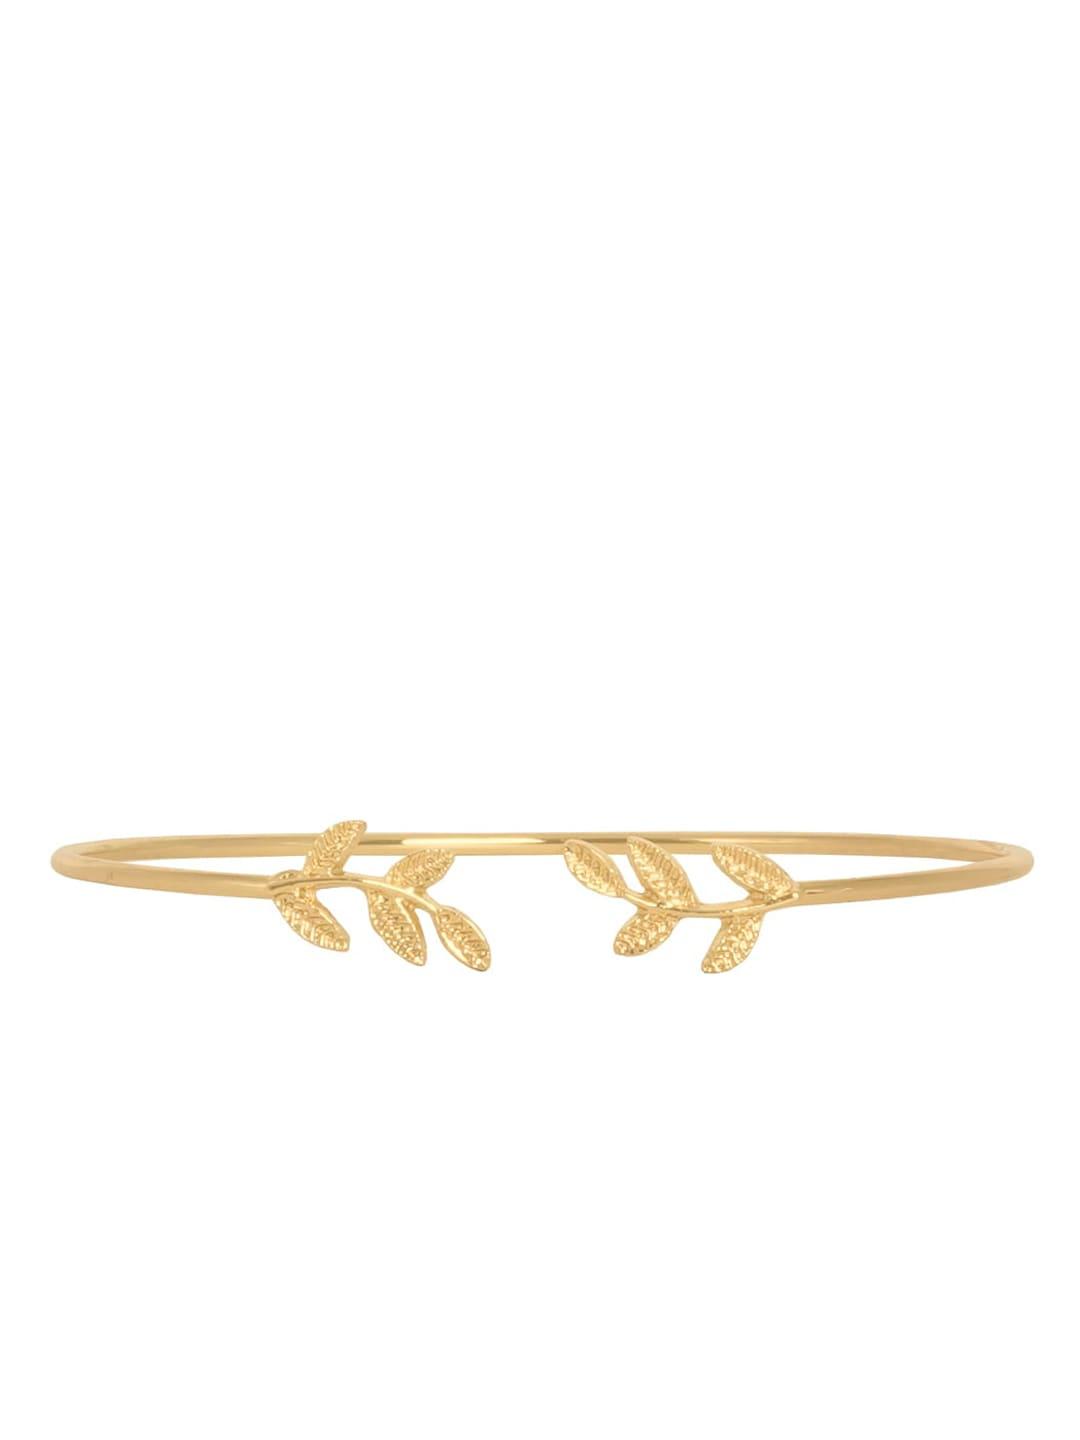 JOKER & WITCH Gold-Plated Alloy Cuff Bracelet